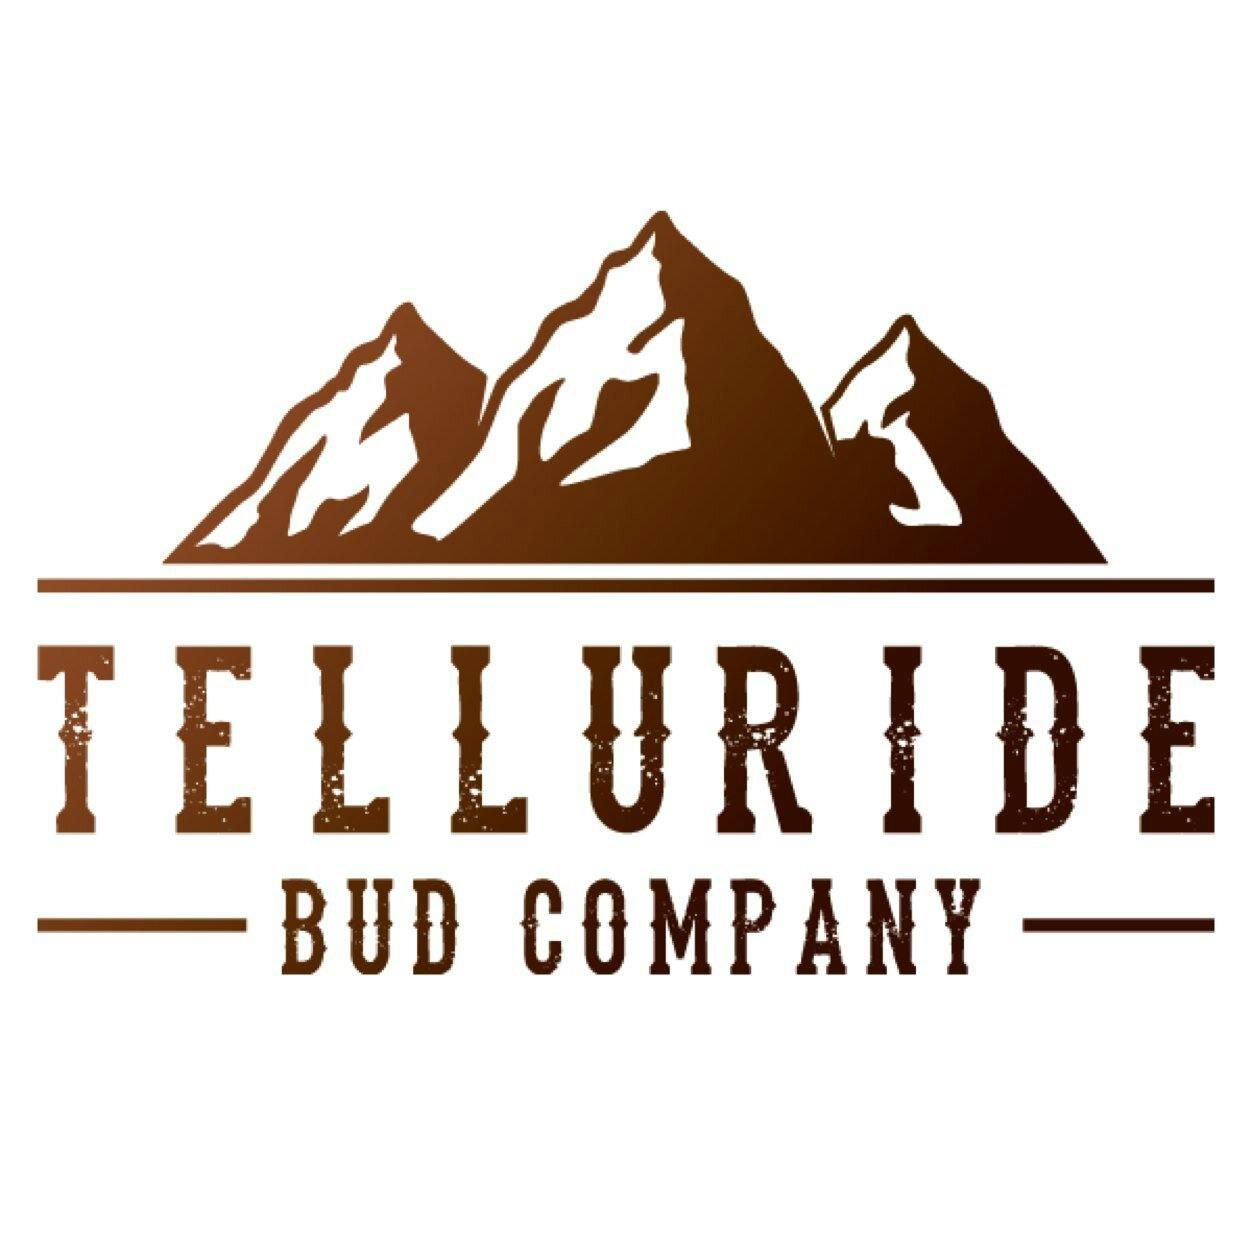 Telluride Bud Company 